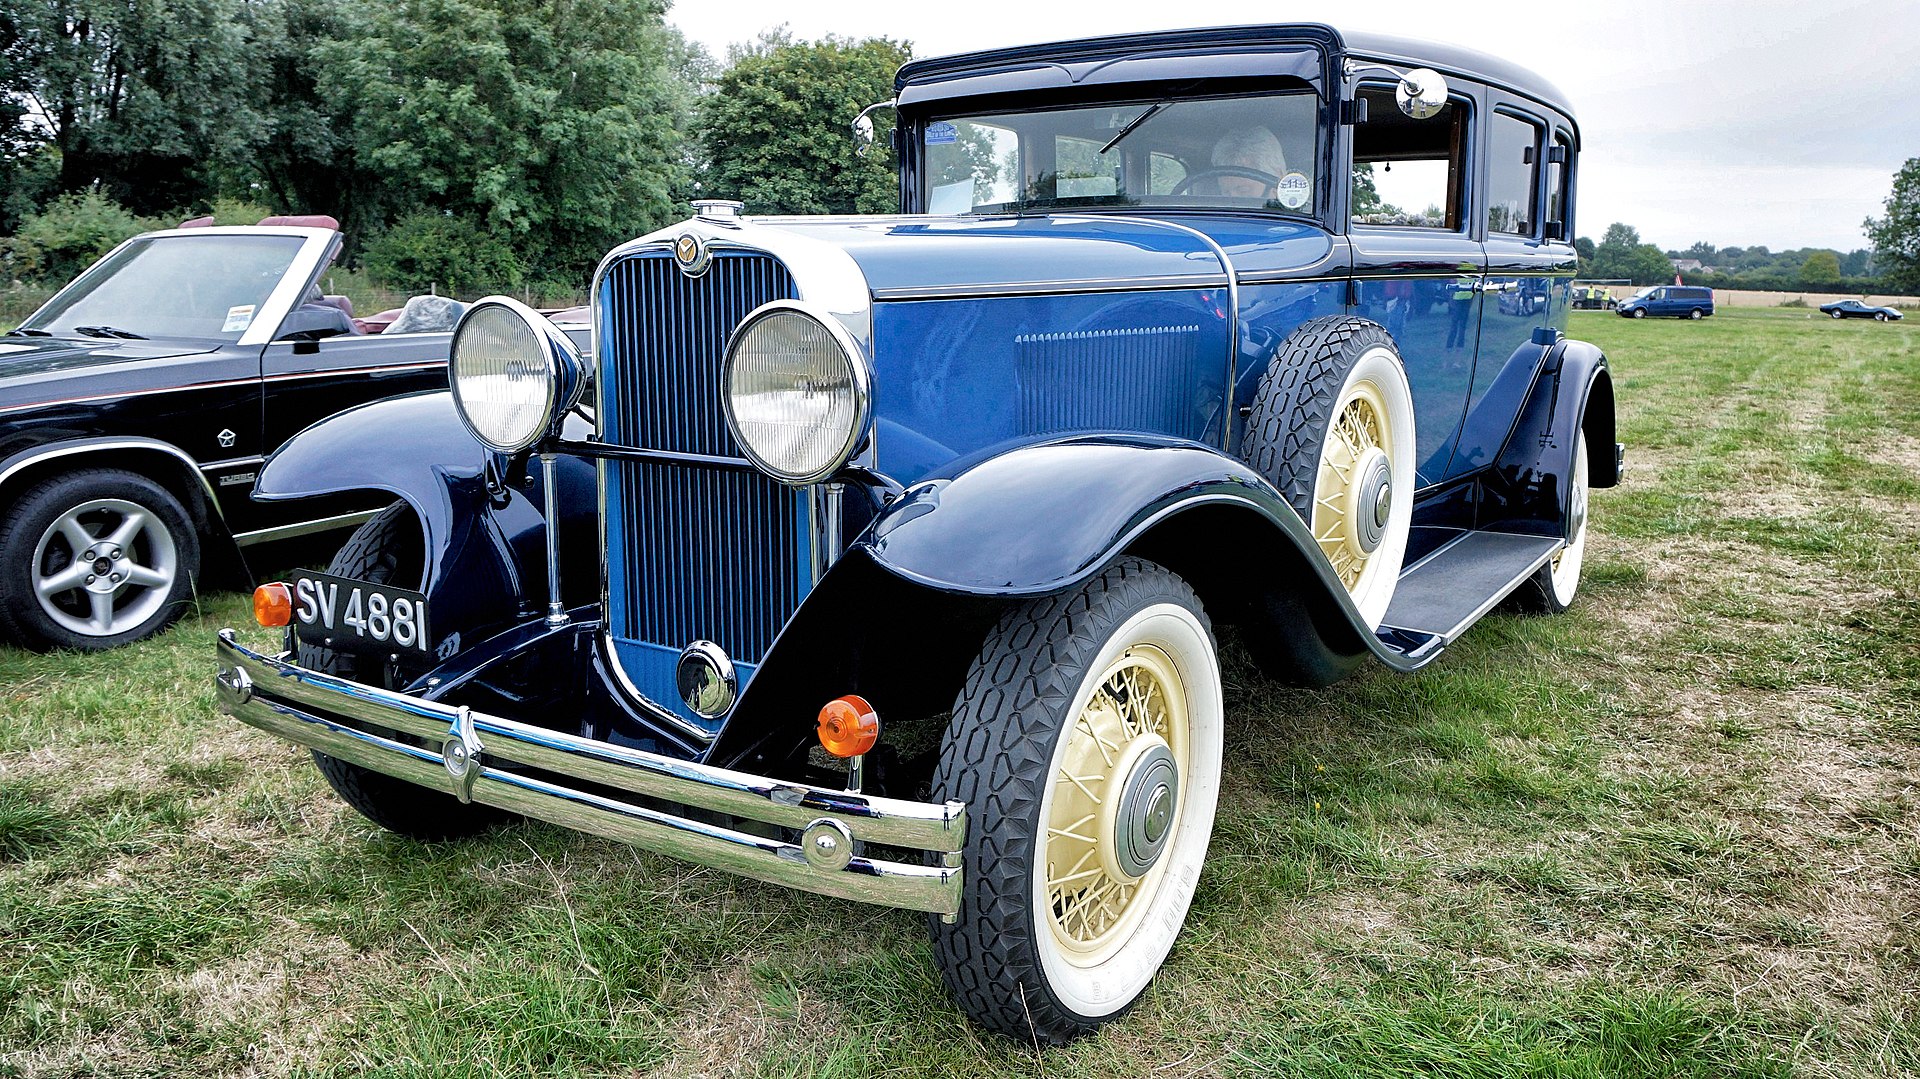 1920px-Canmania_Car_show_-_Wimborne_(958